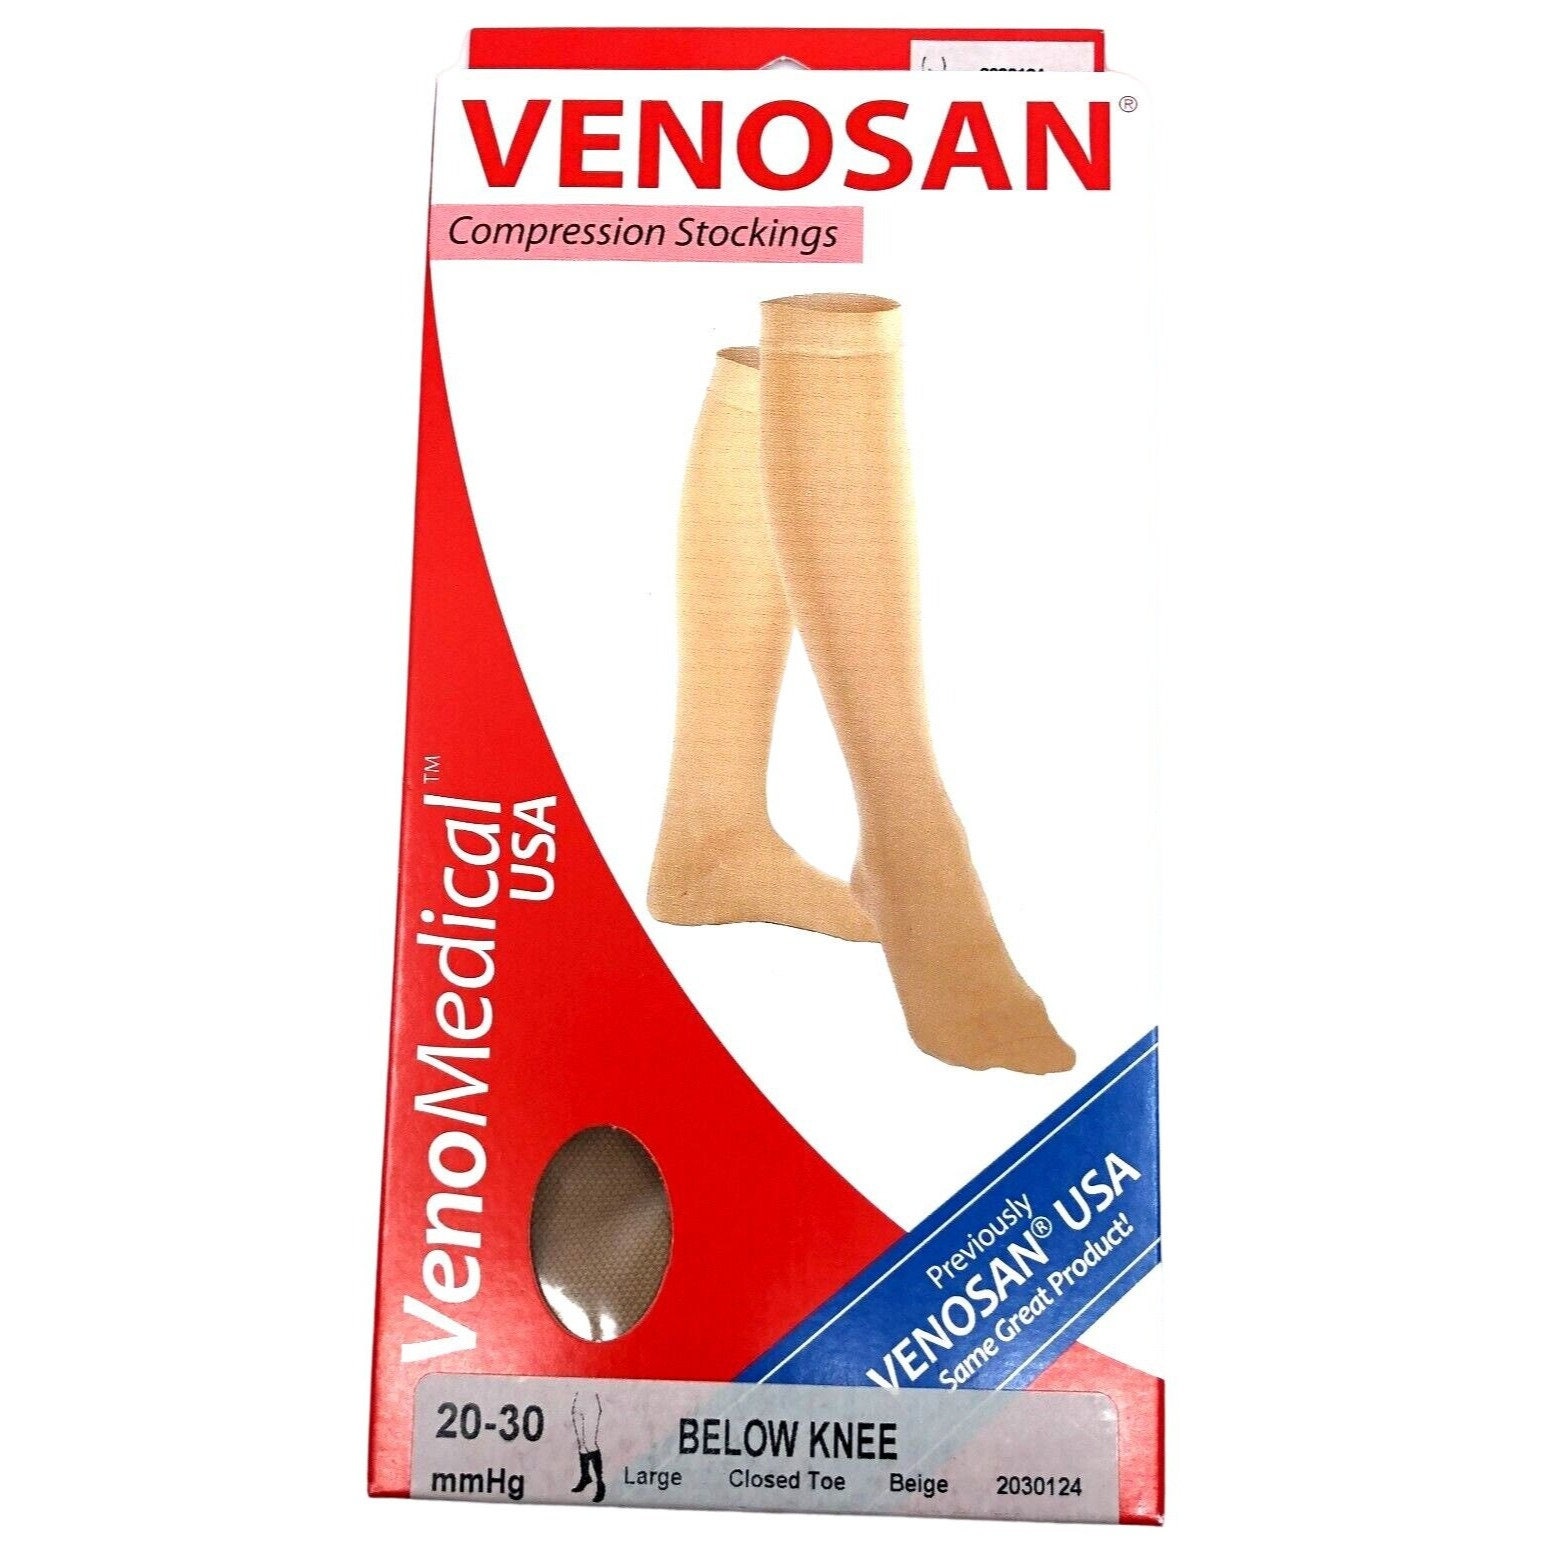 Venosan Compression Stockings Below Knee Large 20-30 Mmhg Closed Toe Beige  USA 